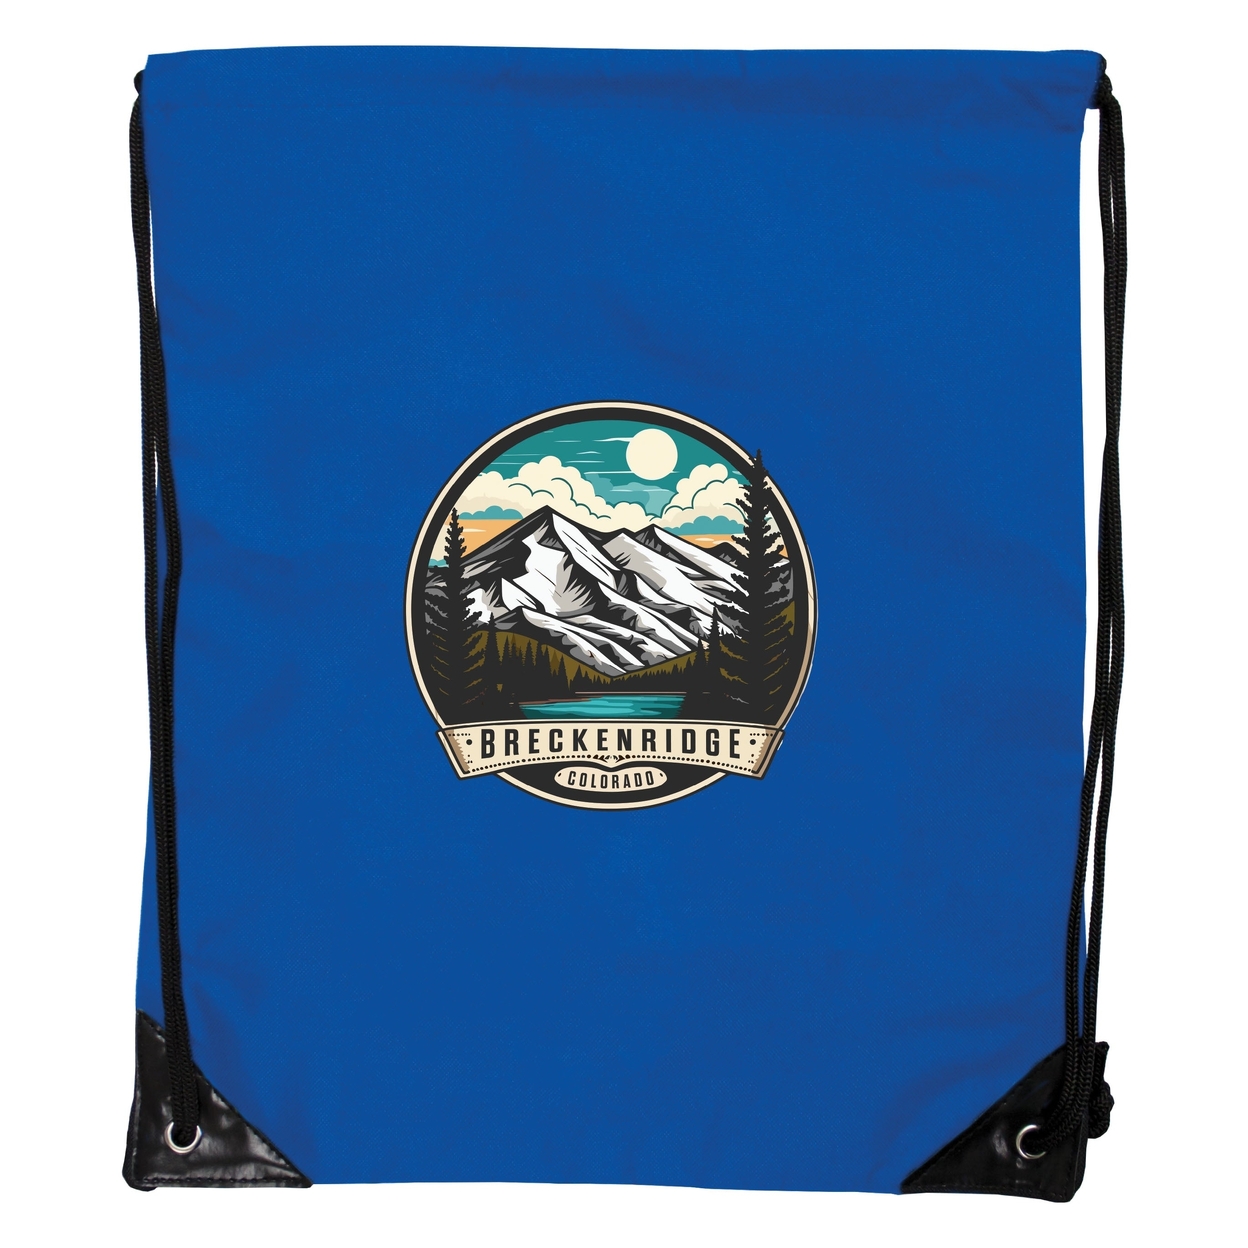 Breckenridge Colorado Design A Souvenir Cinch Bag With Drawstring Backpack Black - Navy